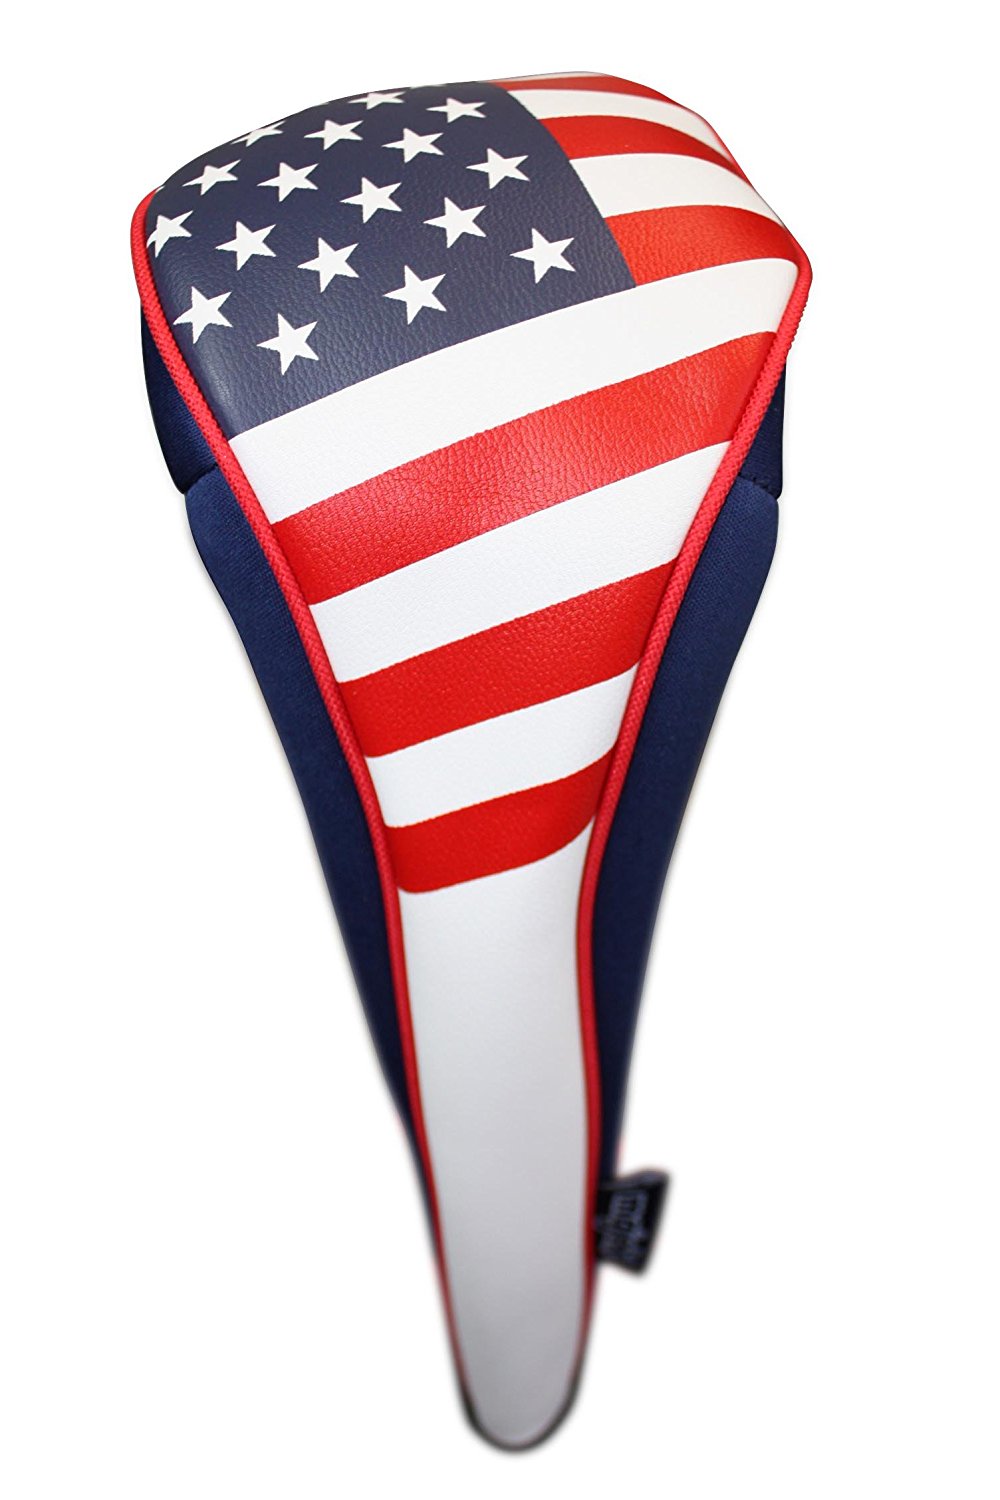 USA Patriot Golf Zipper Head Covers 3 Fairway Wood Headcover Neoprene Style Patriotic - image 1 of 4